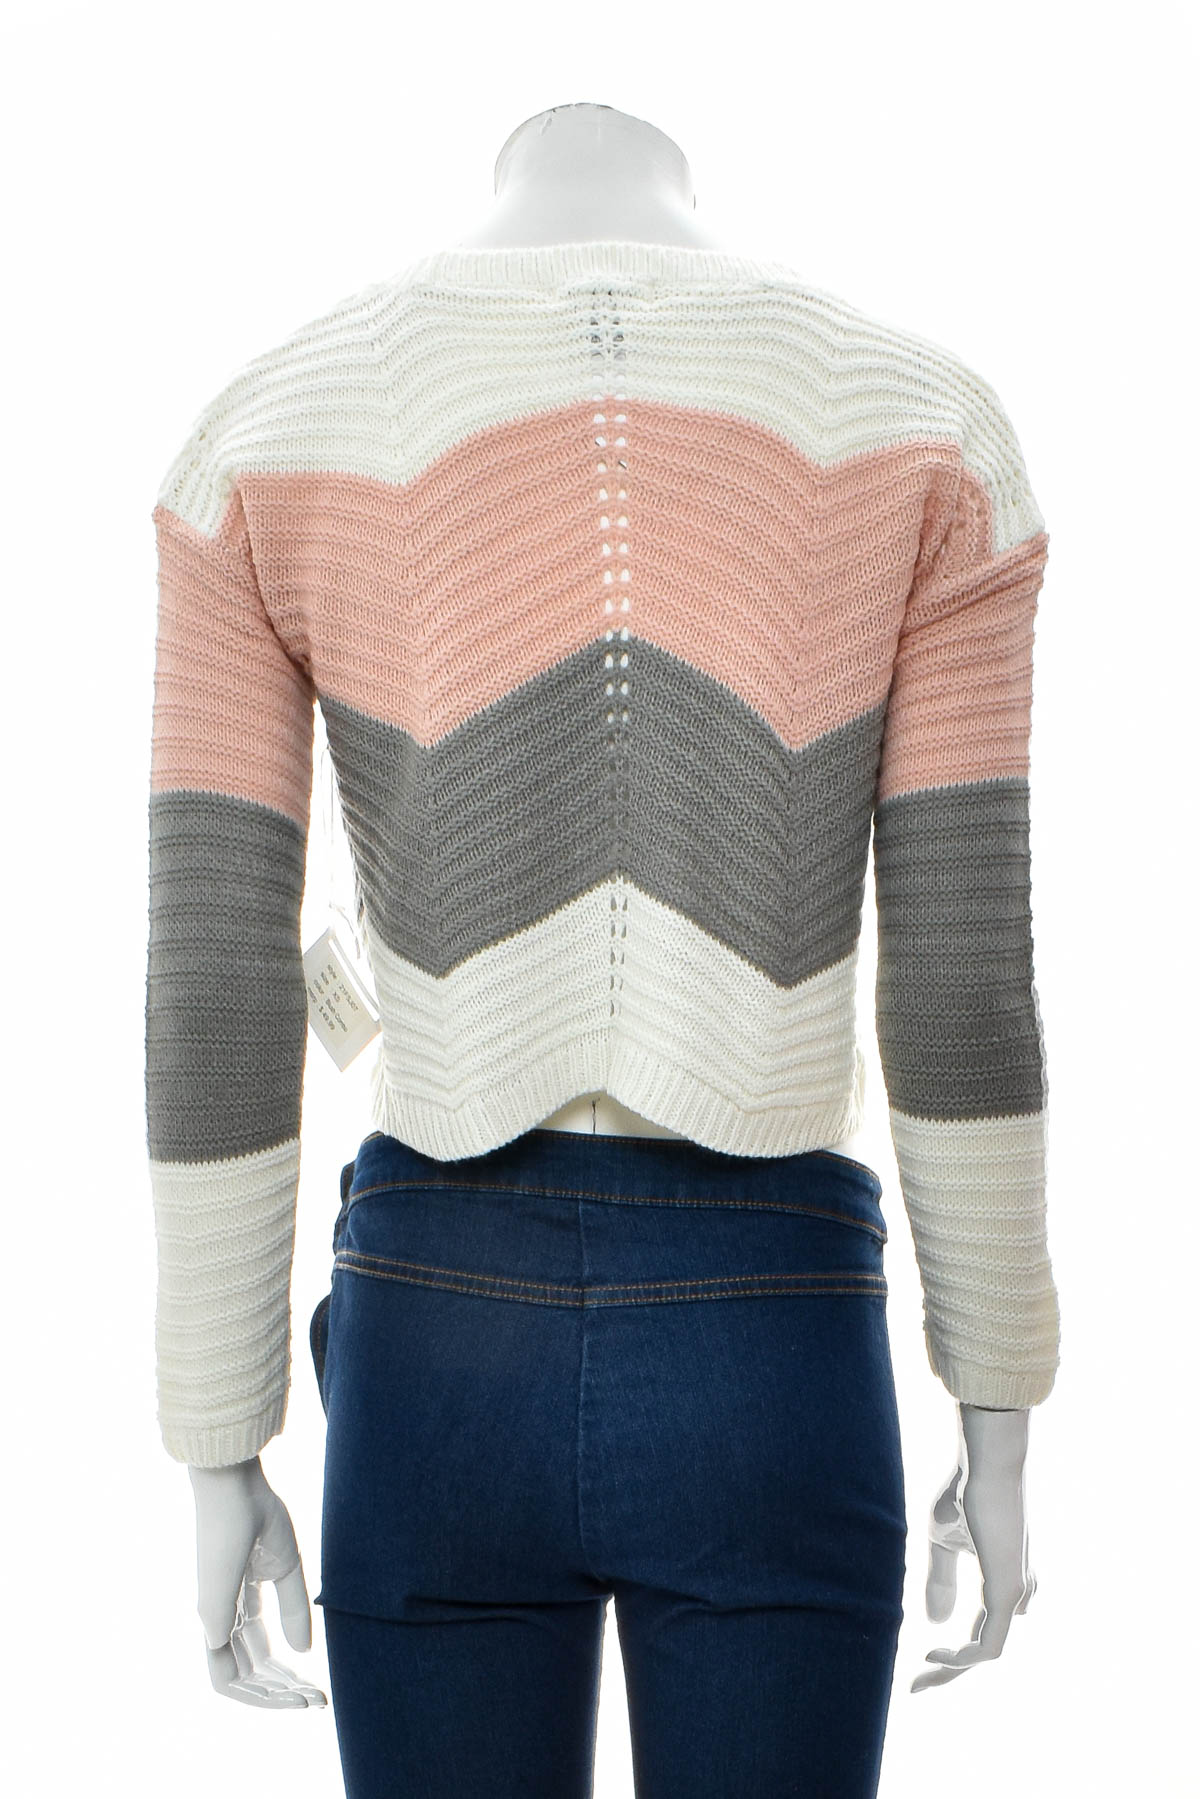 Women's sweater - Luvlink - 1